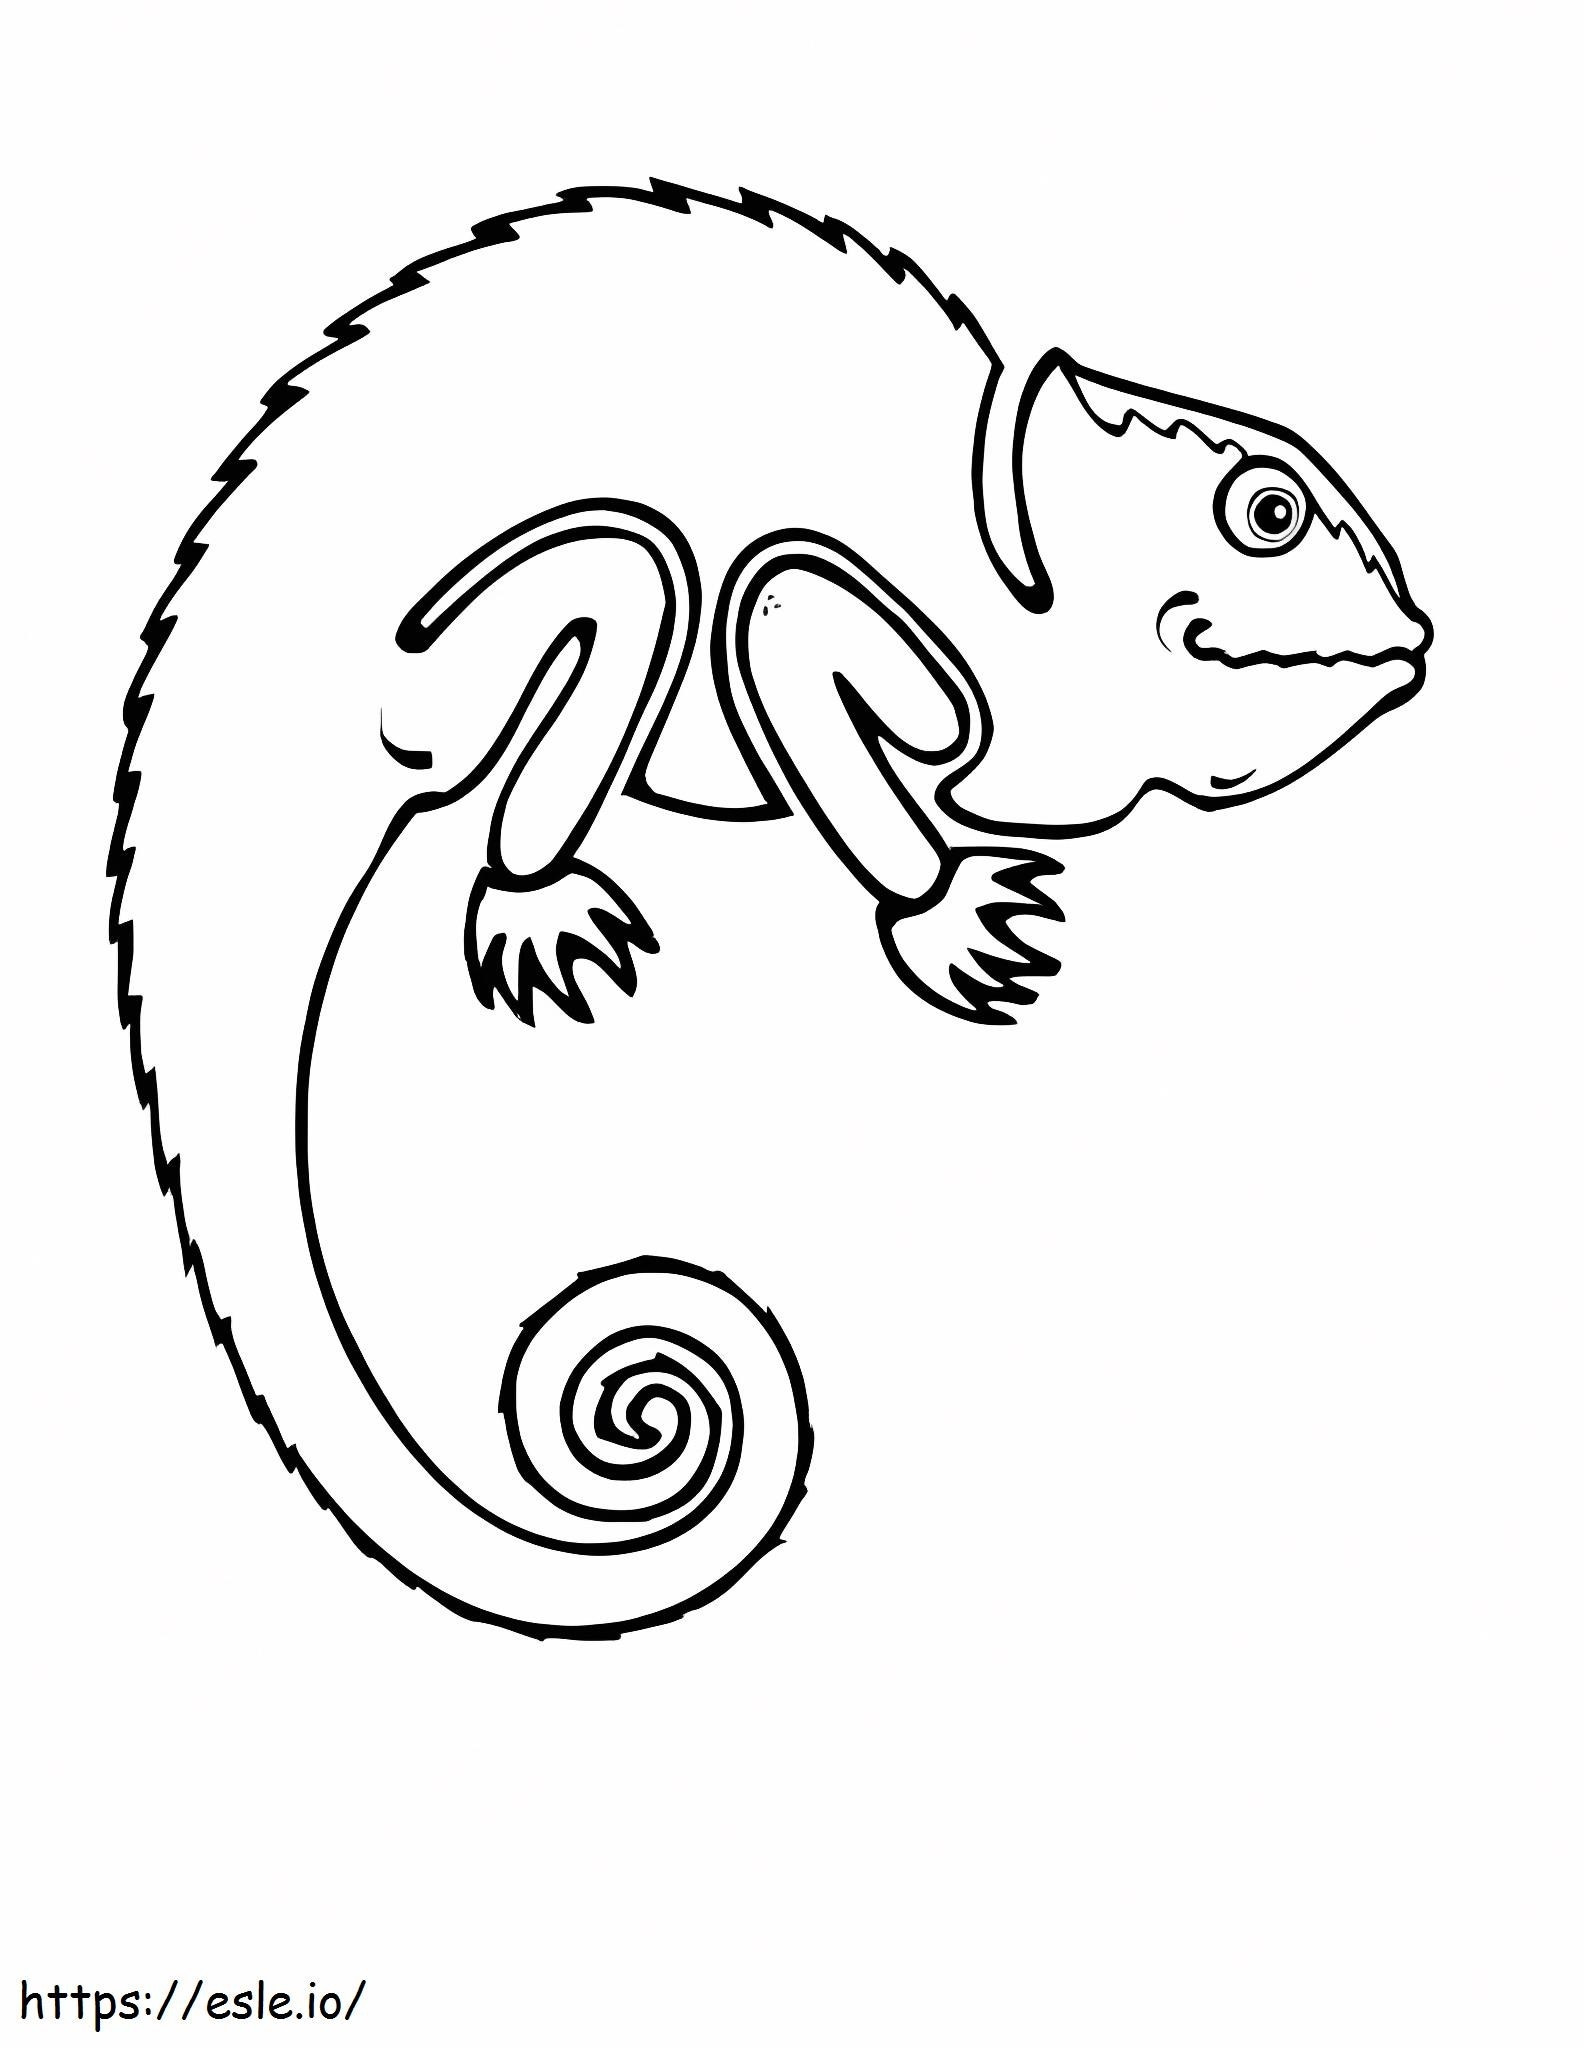 Coloriage Gecko à imprimer dessin